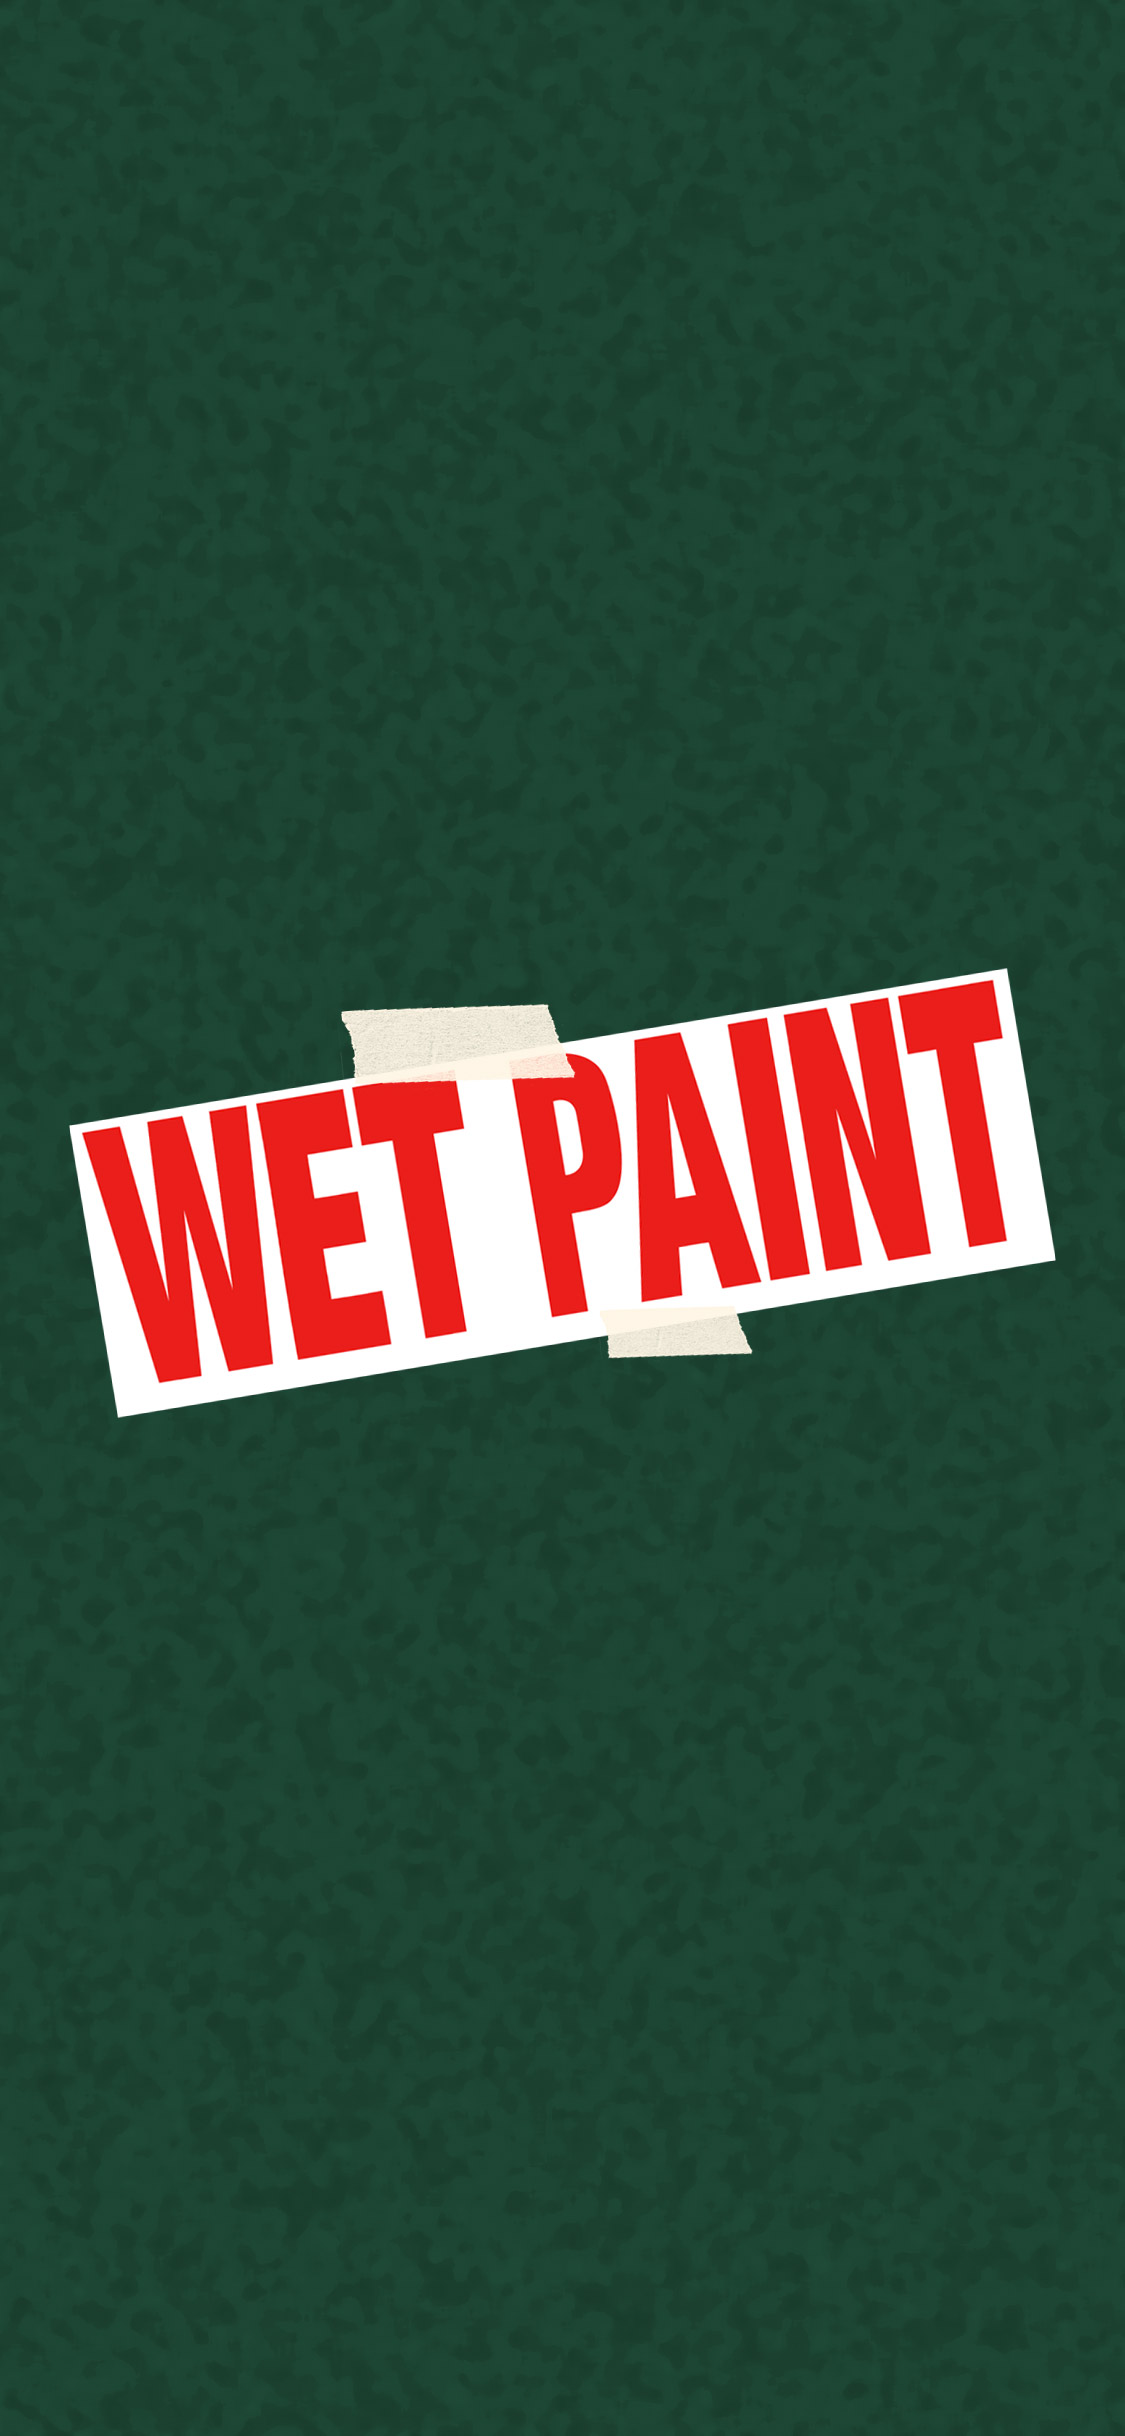 phone wallpaper displaying mta // wet paint sign